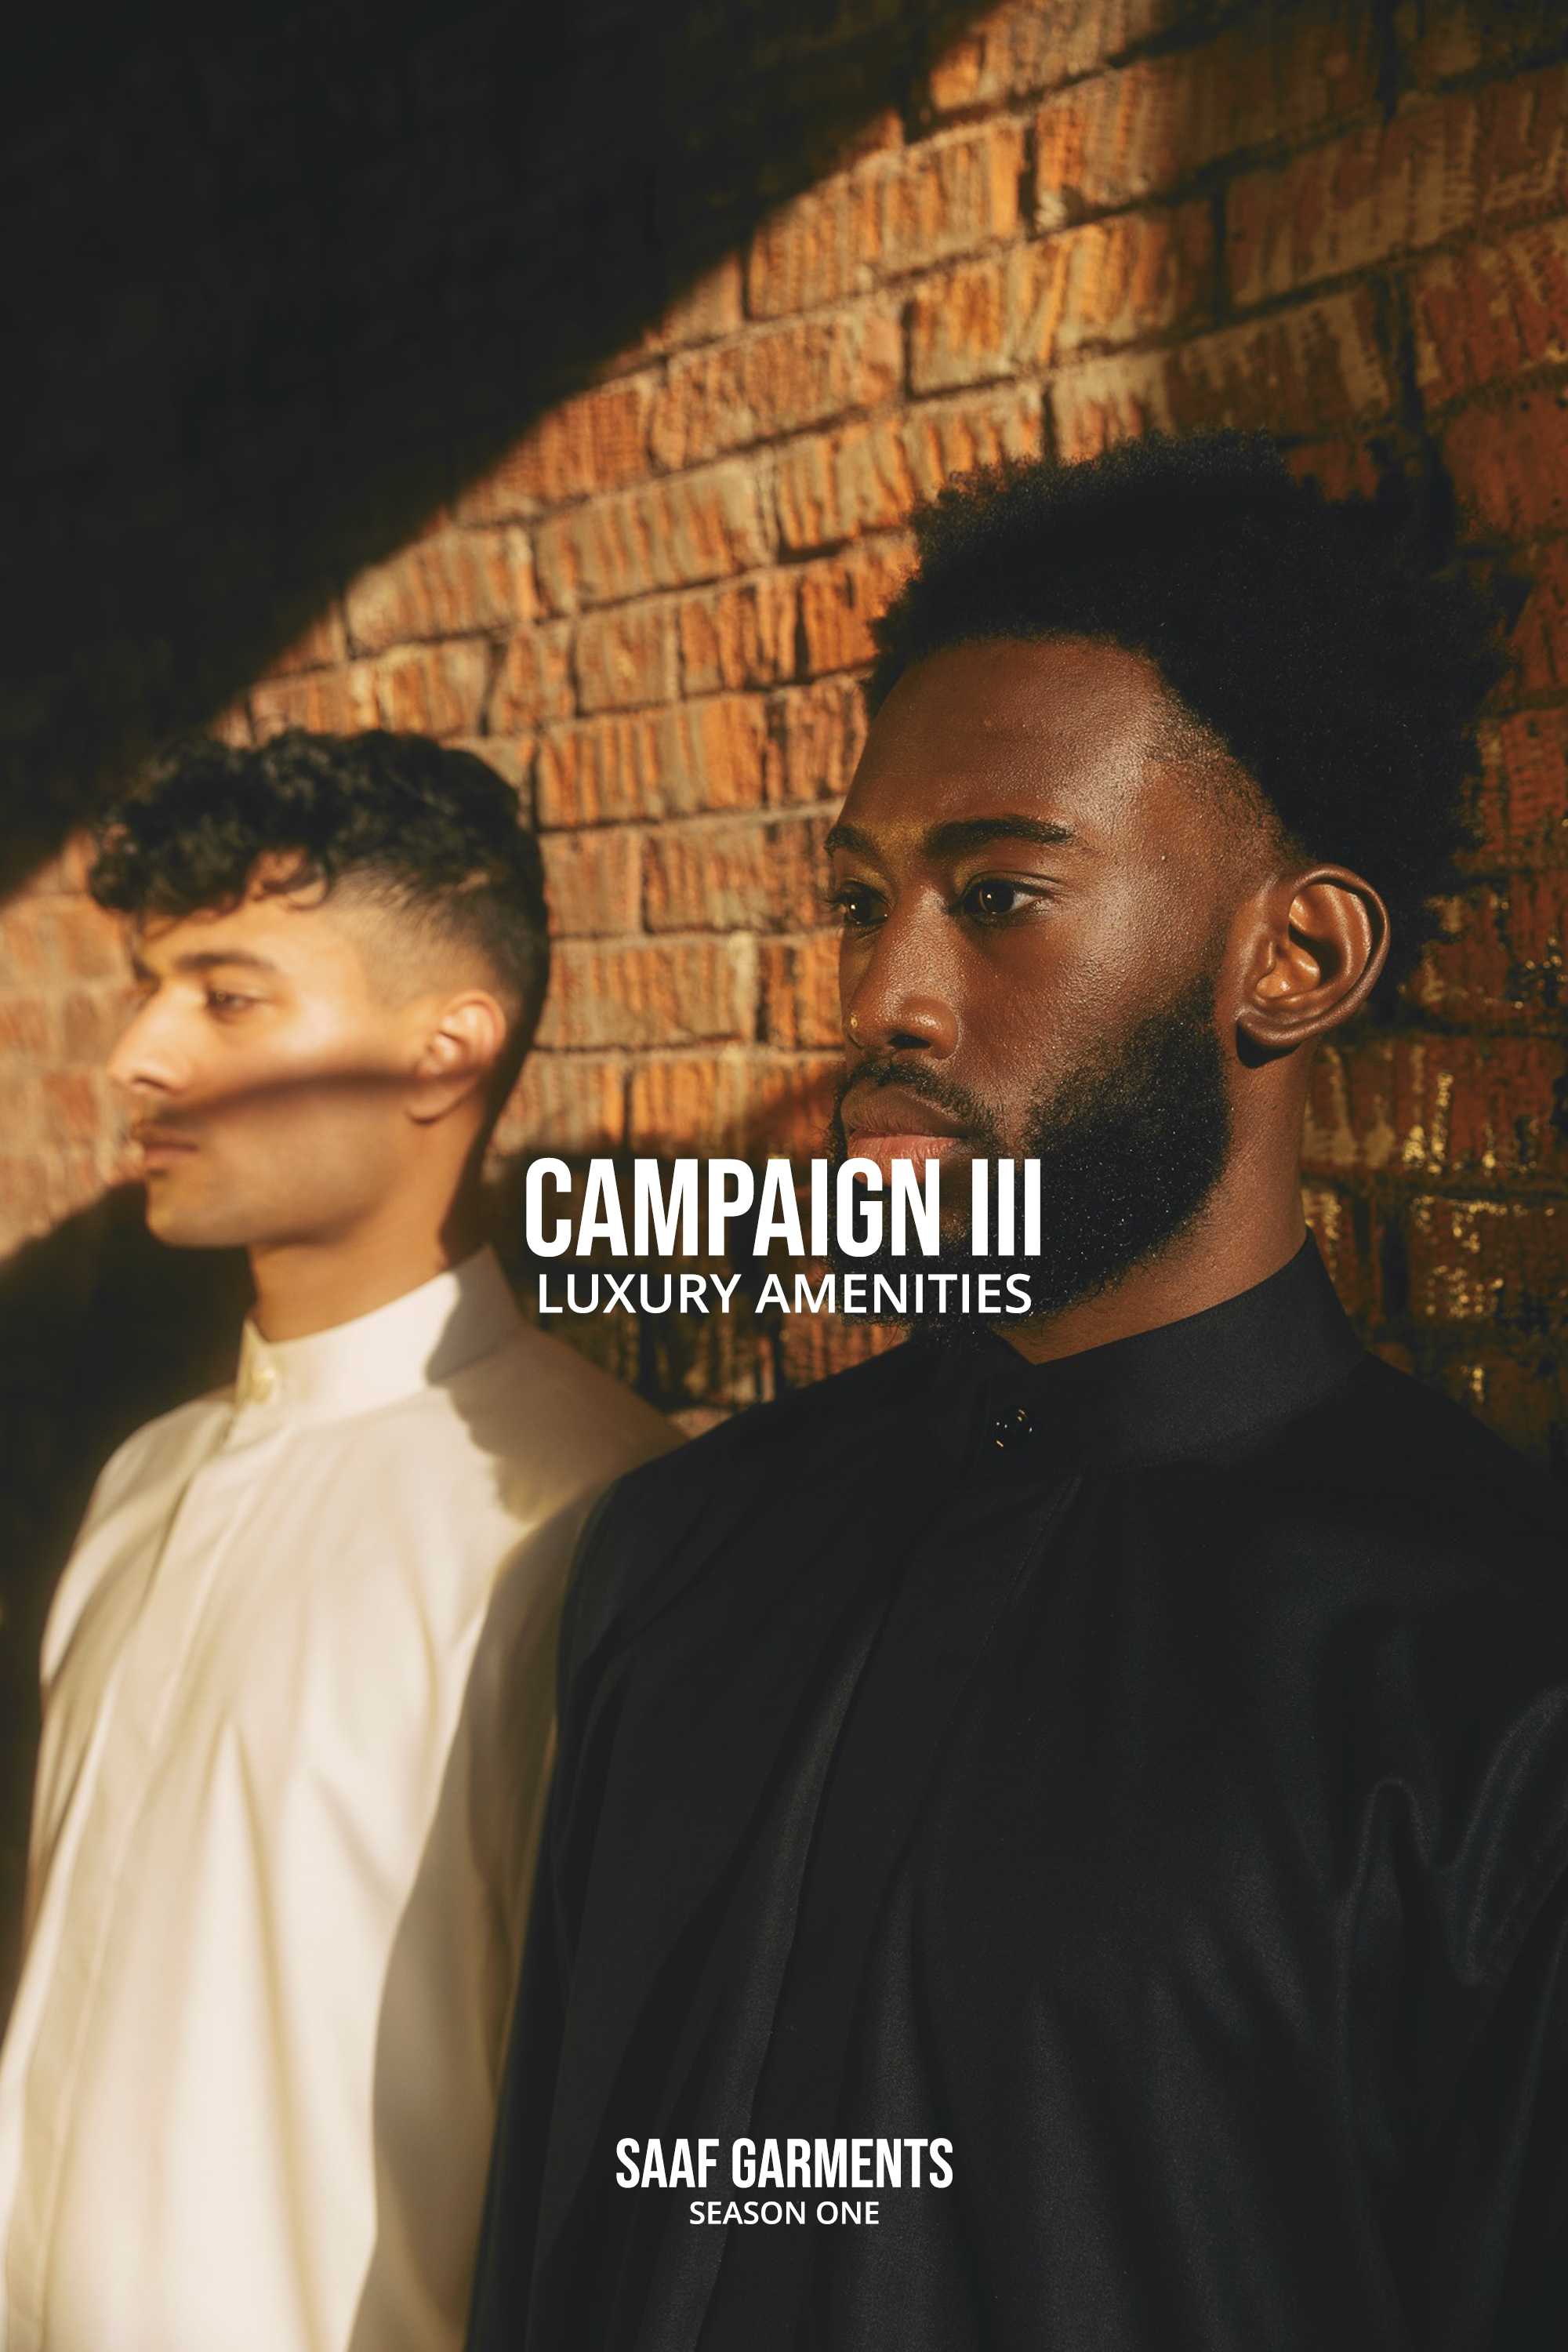 "Campaign III - Luxury Amenities"